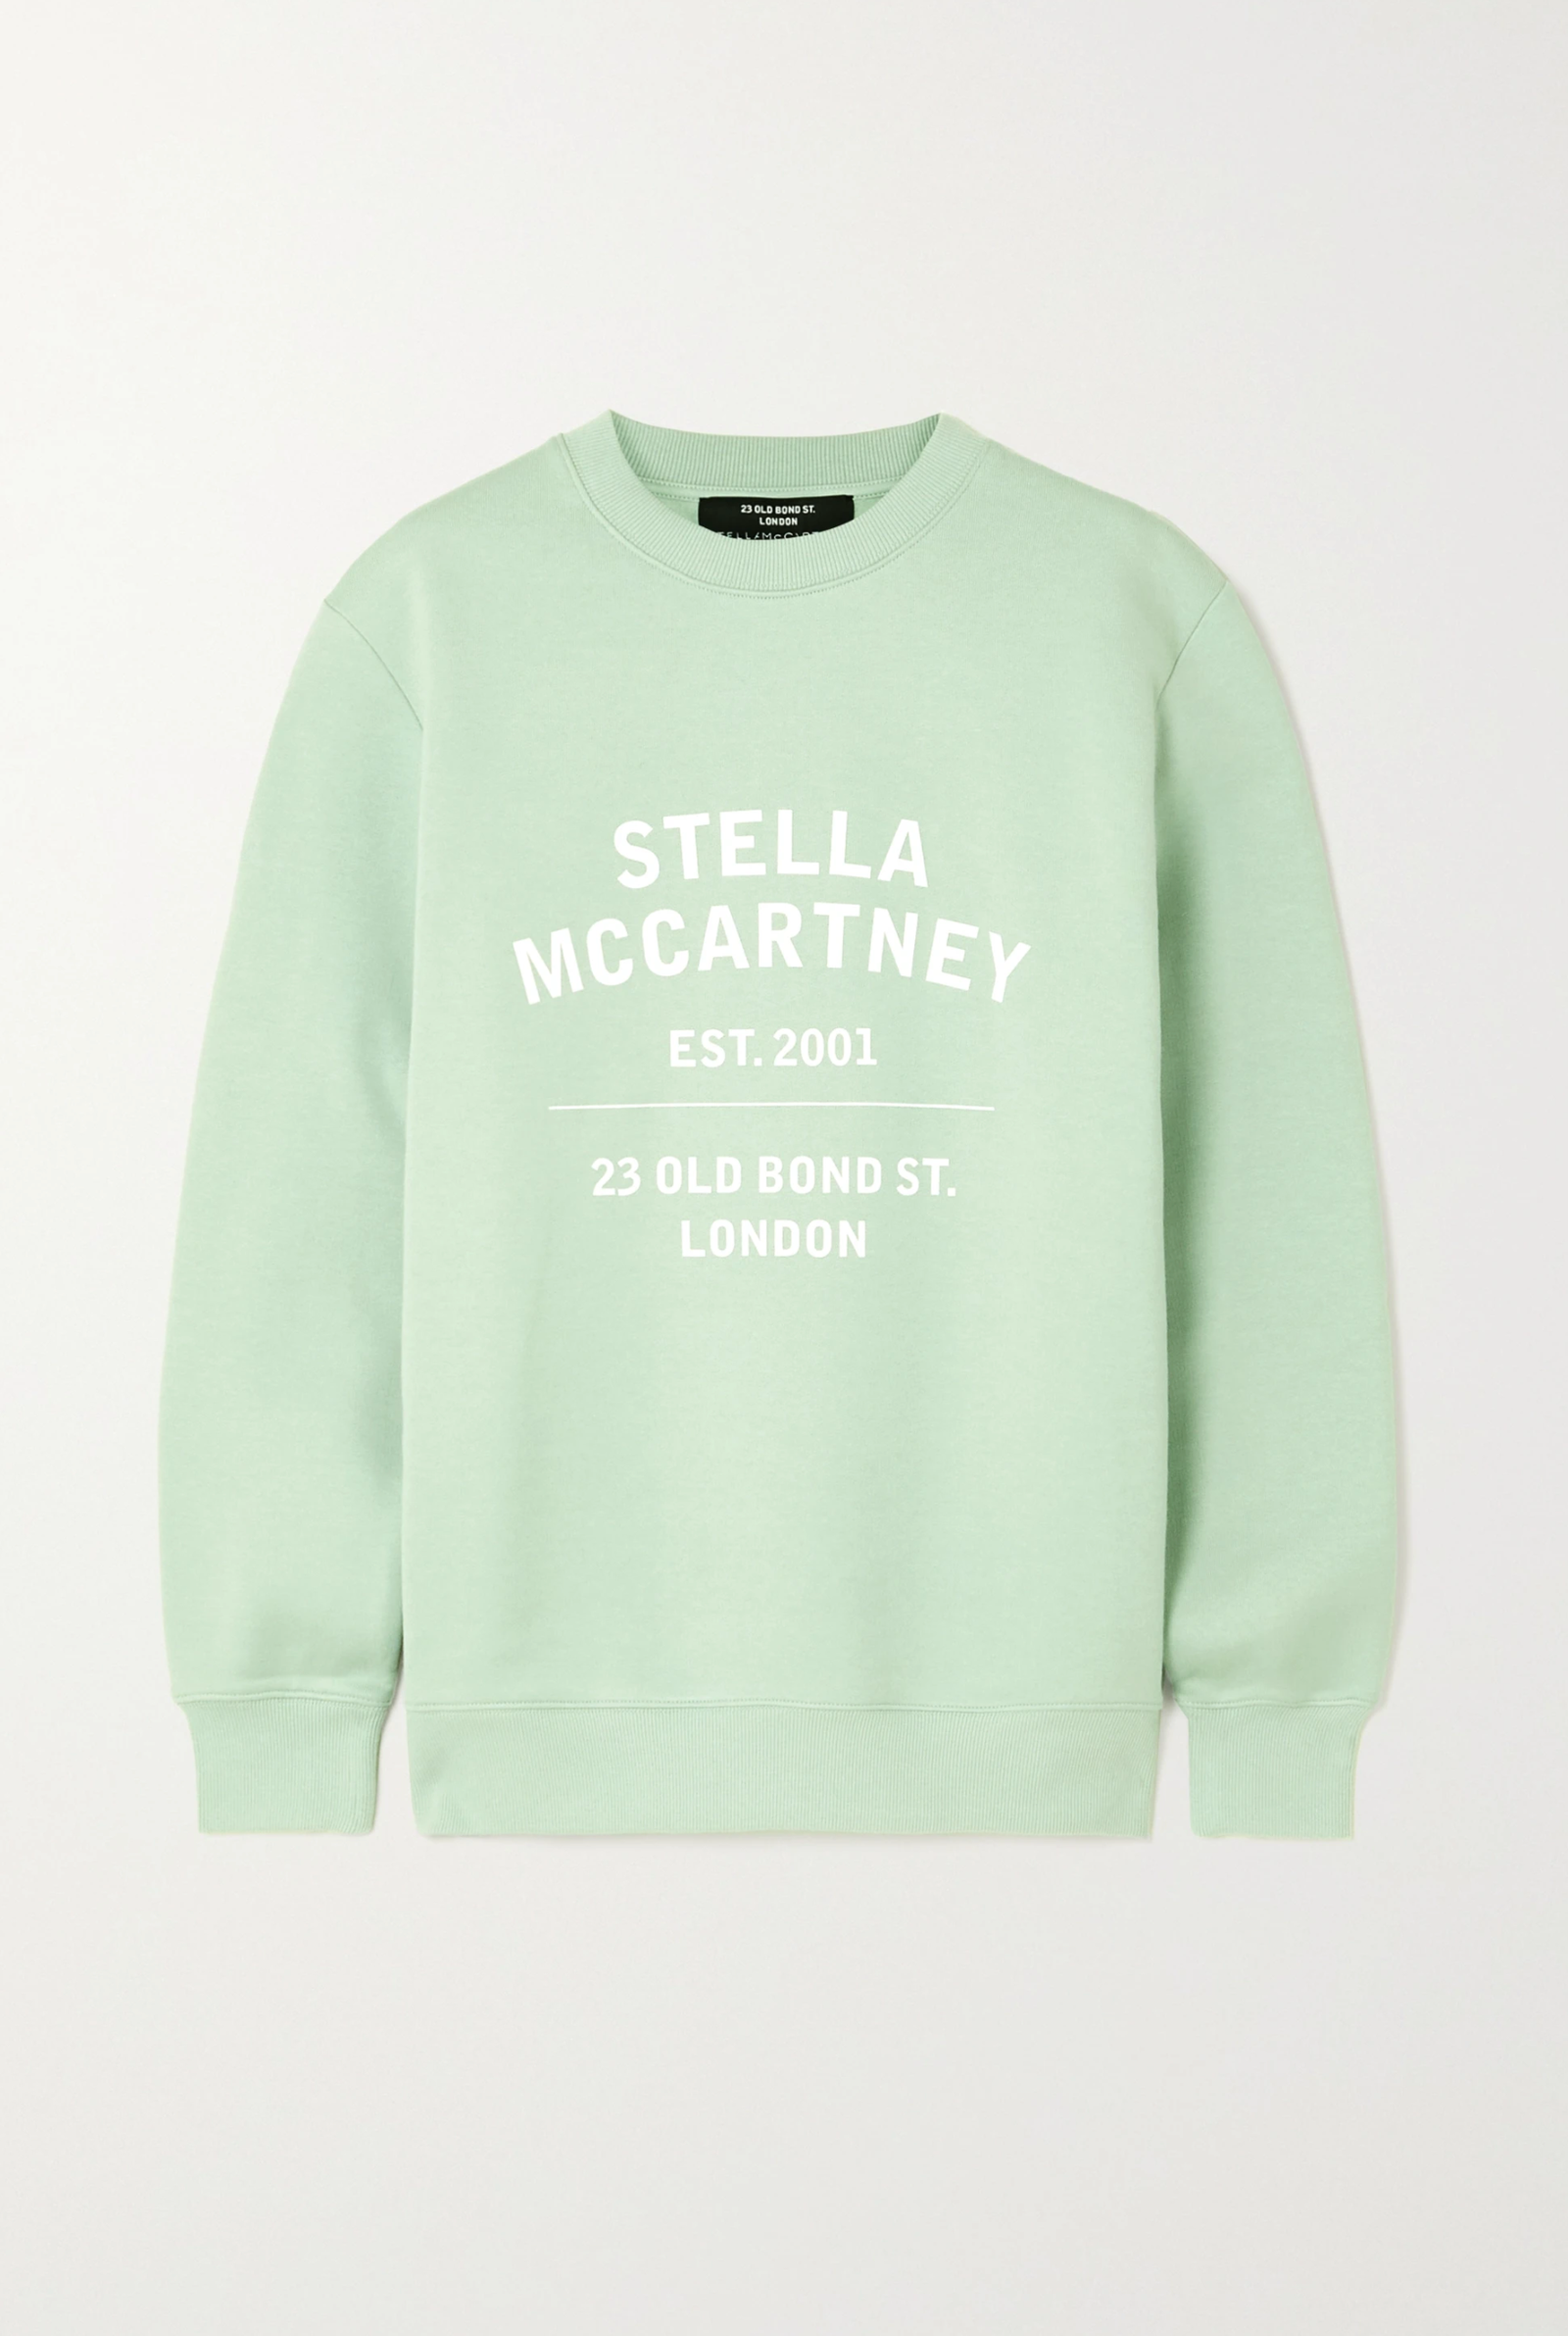 Stella McCartney 302.54 netaporter.com